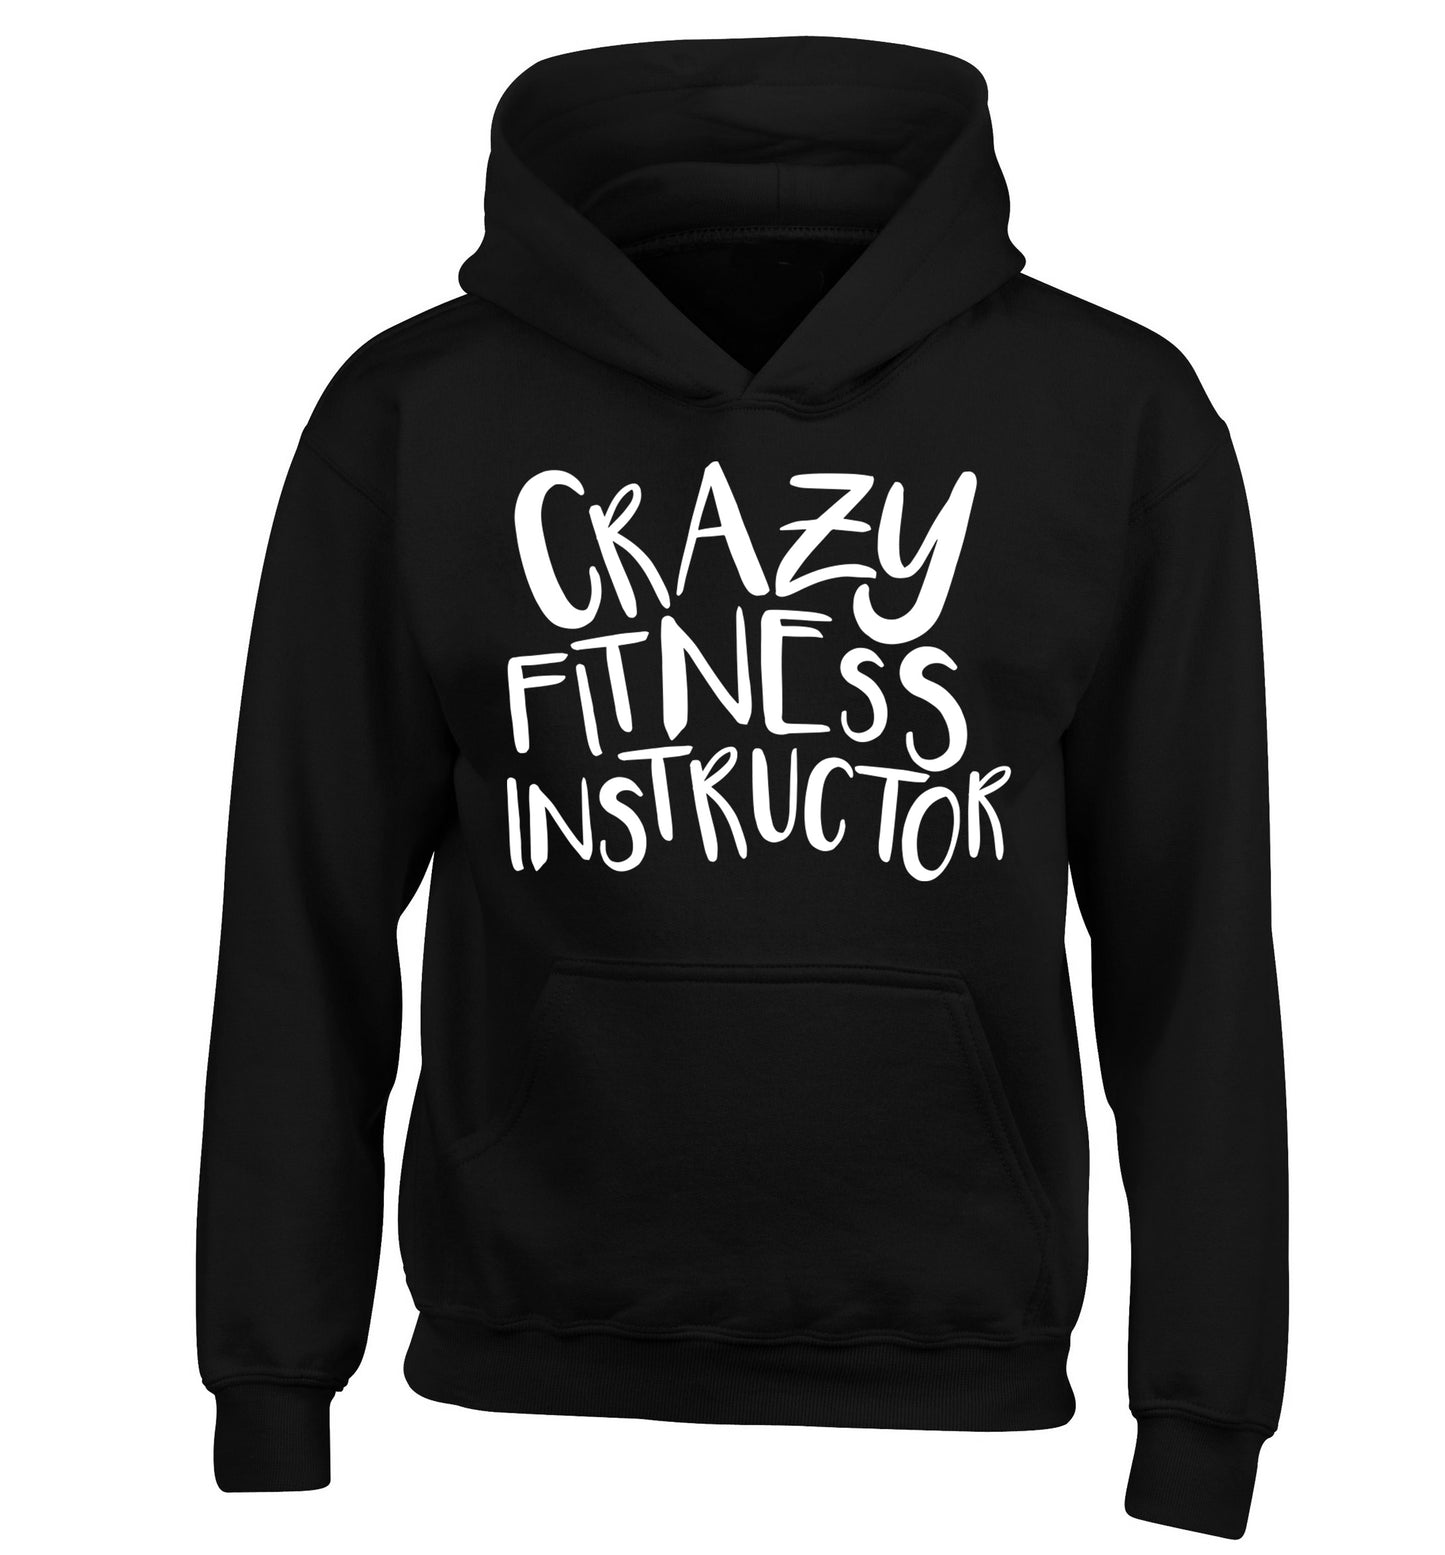 Crazy fitness instructor children's black hoodie 12-13 Years